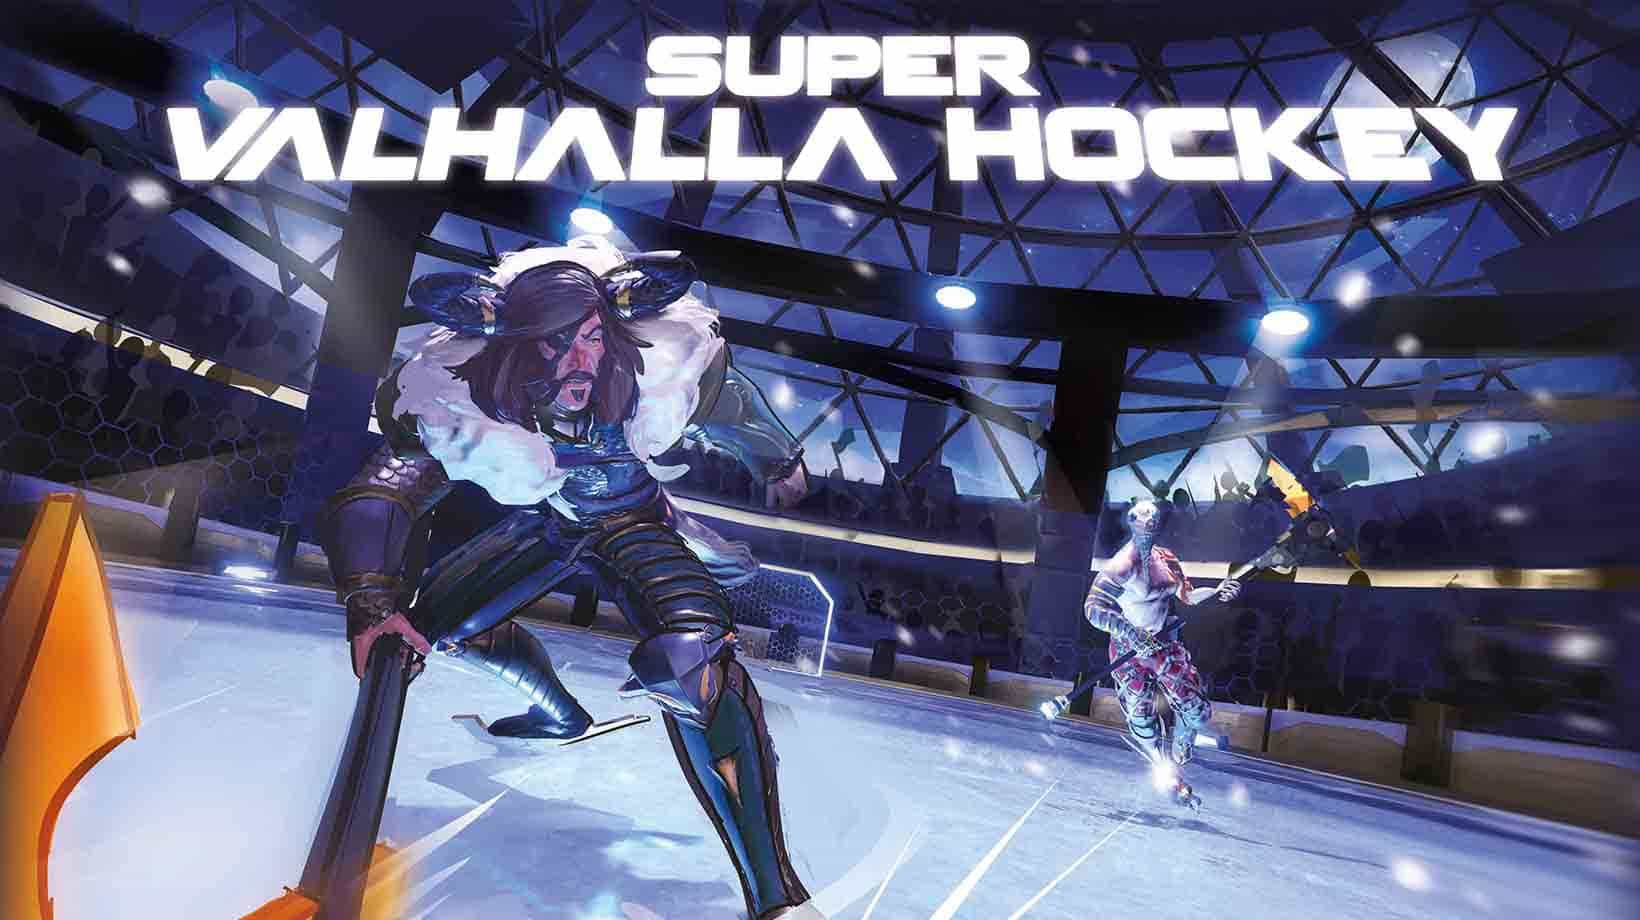 Super Valhalla Hockey